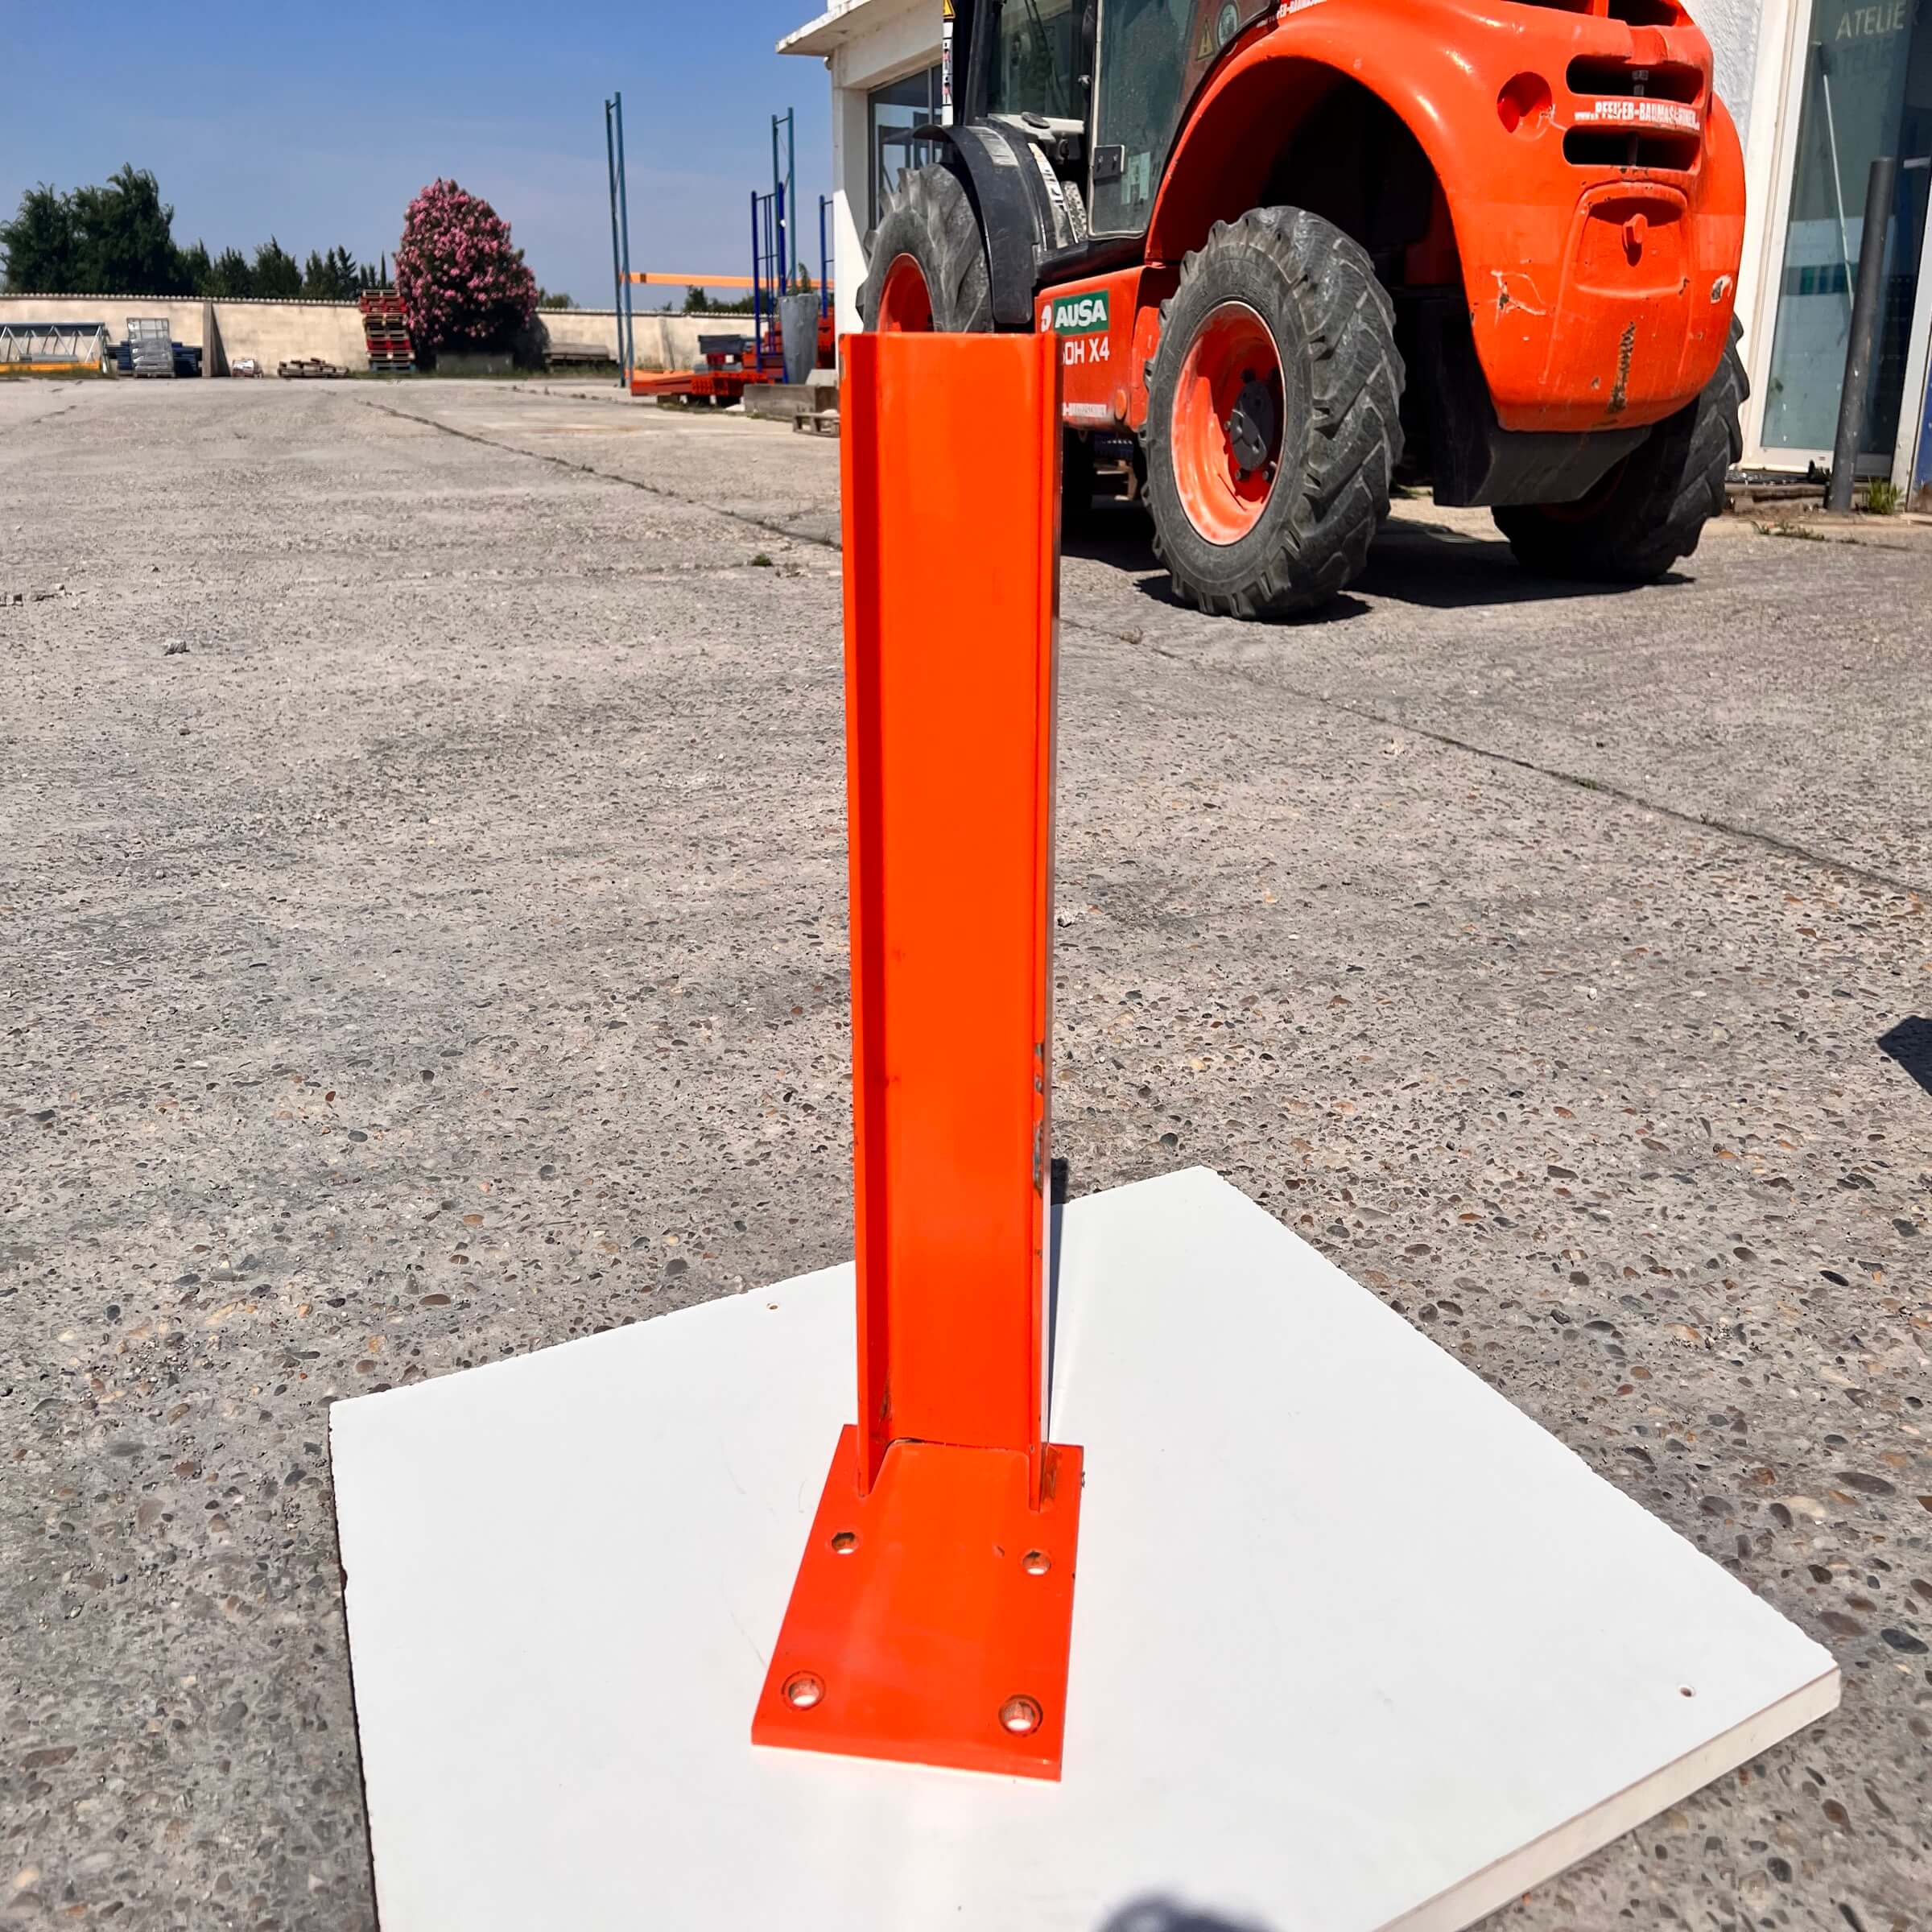 Orange U-shaped post